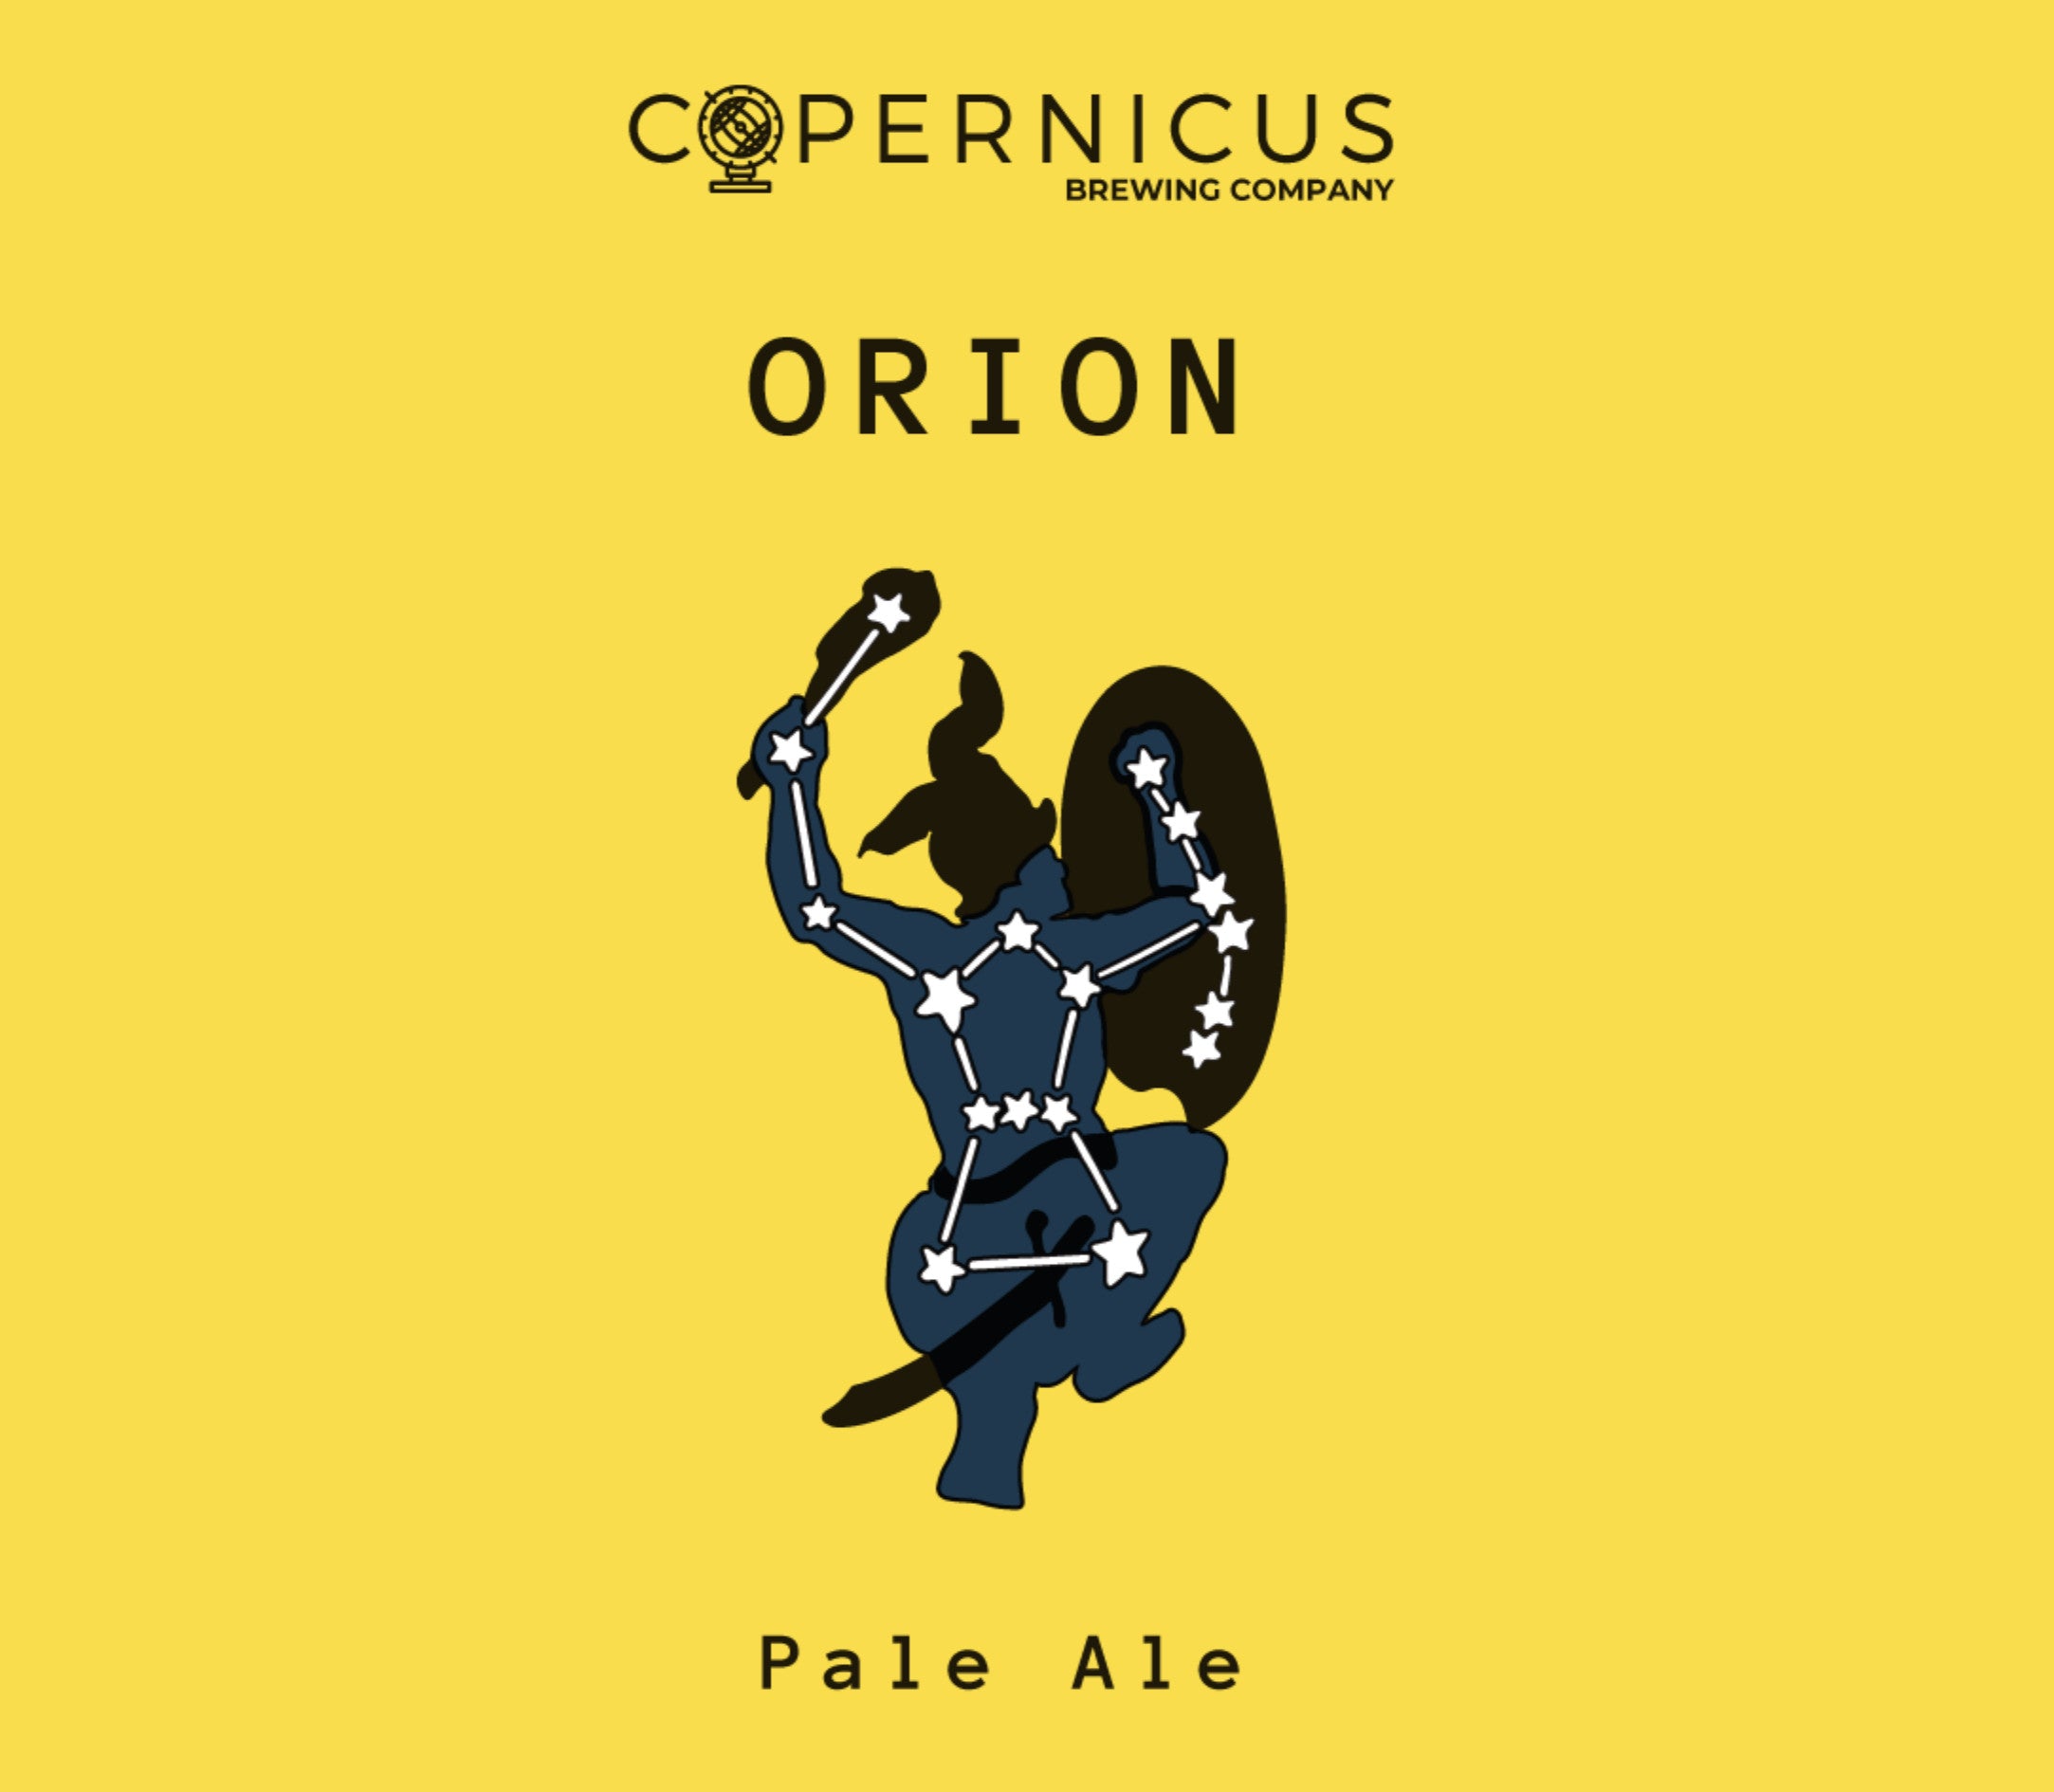 Etiqueta de cerveza Copernicus Orion - Pale Ale